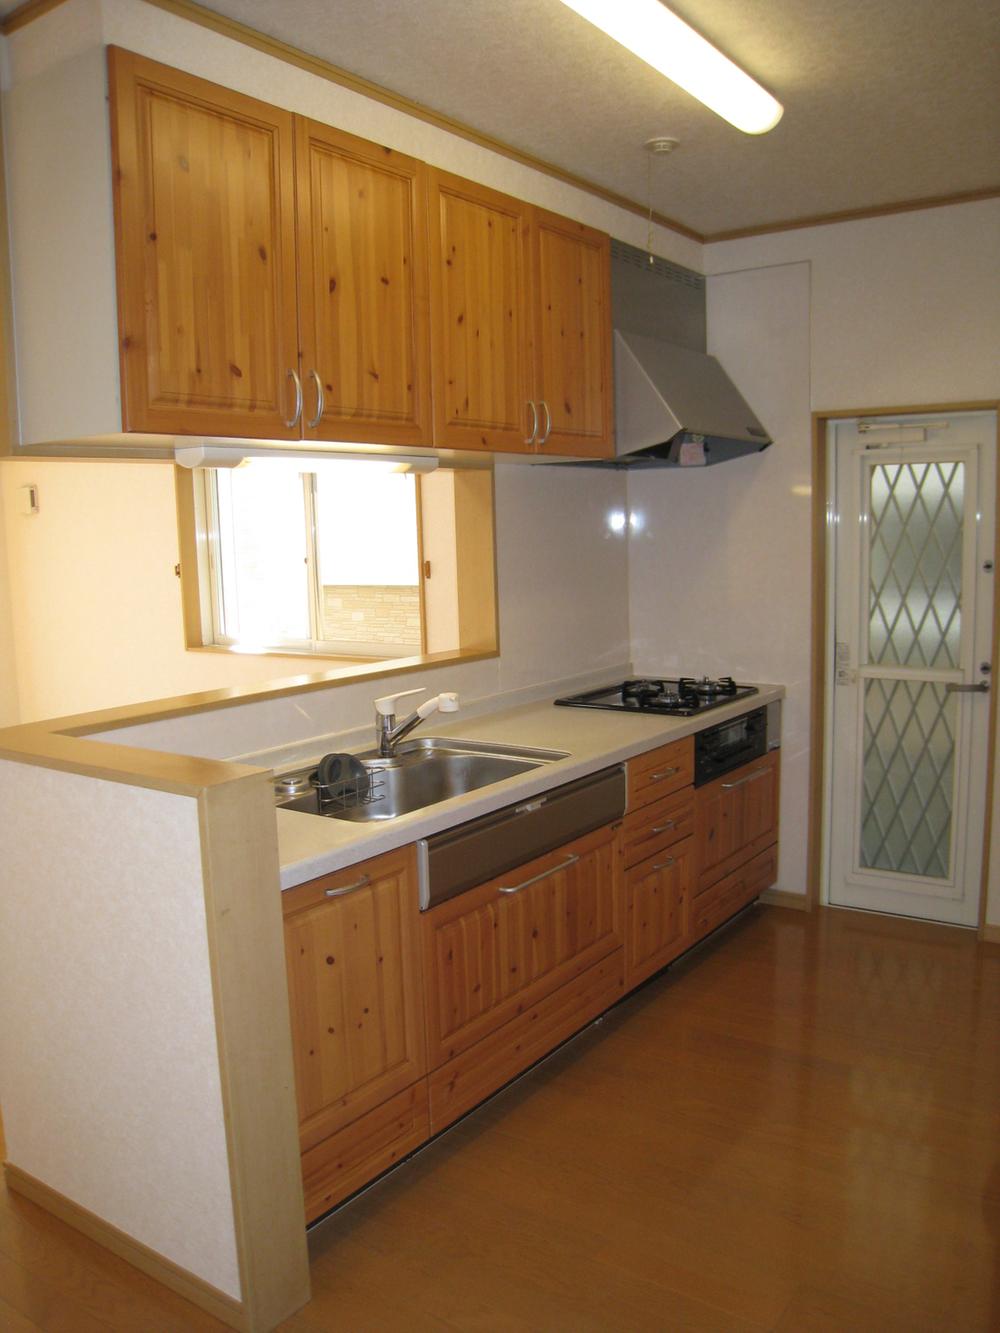 Kitchen. Stylish kitchen of woodgrain